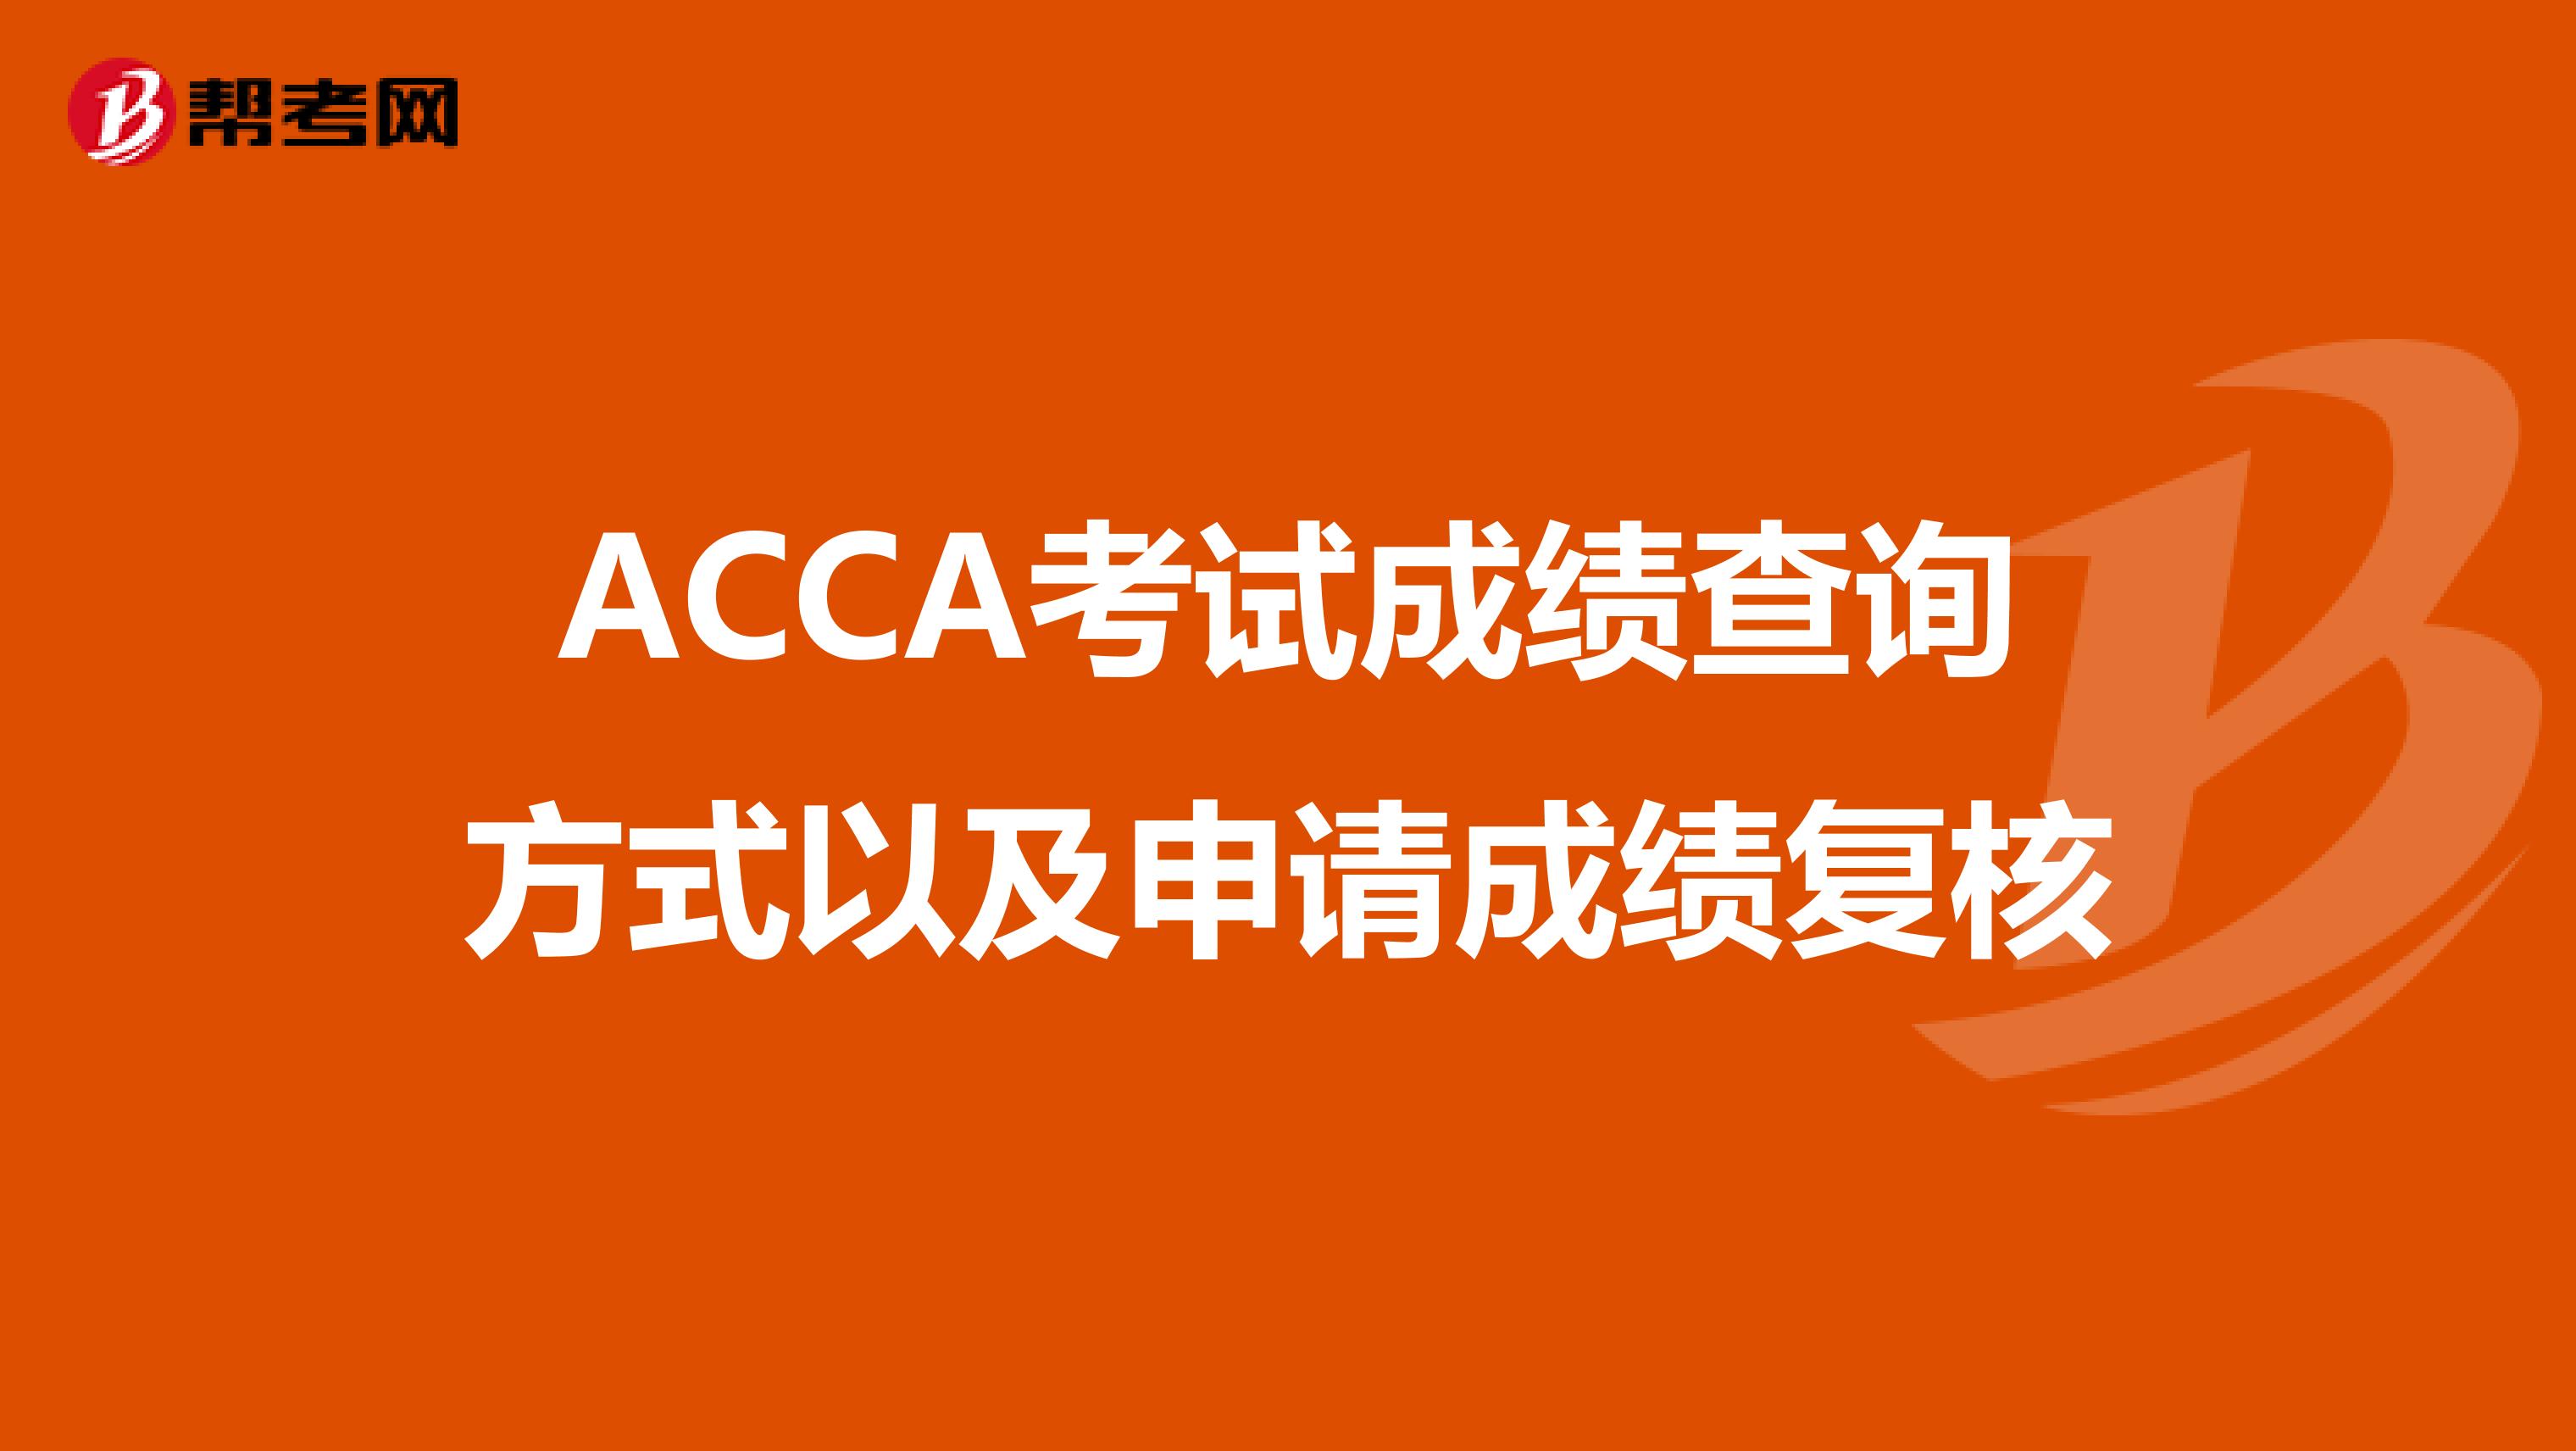 ACCA考试成绩查询方式以及申请成绩复核